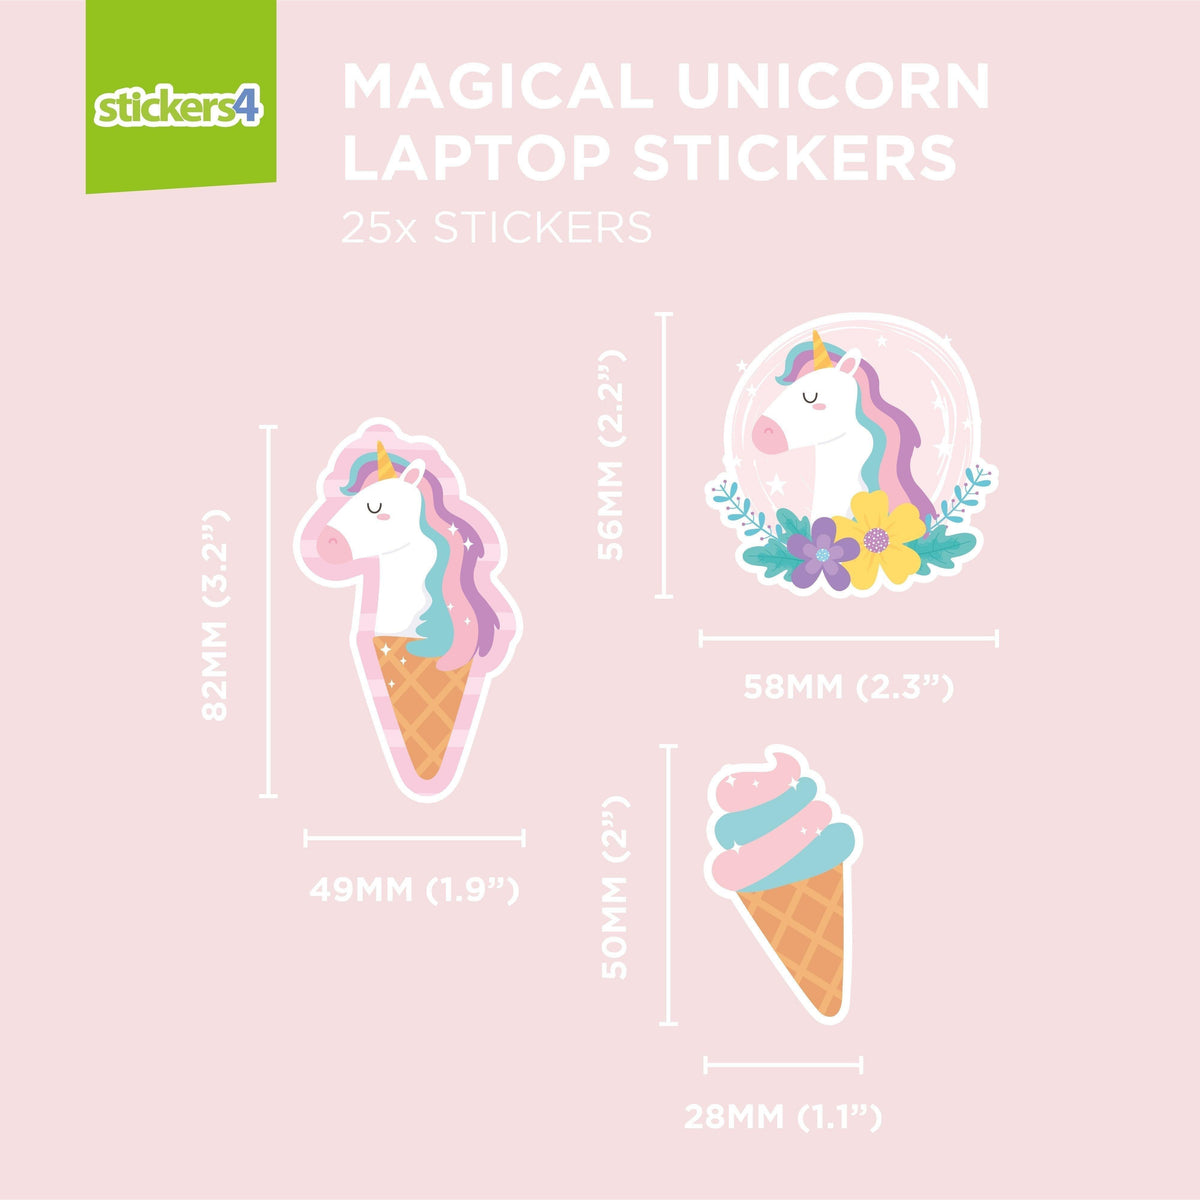 Unicorn Sticker Pack - Perfect Stocking Filler Laptop Sticker